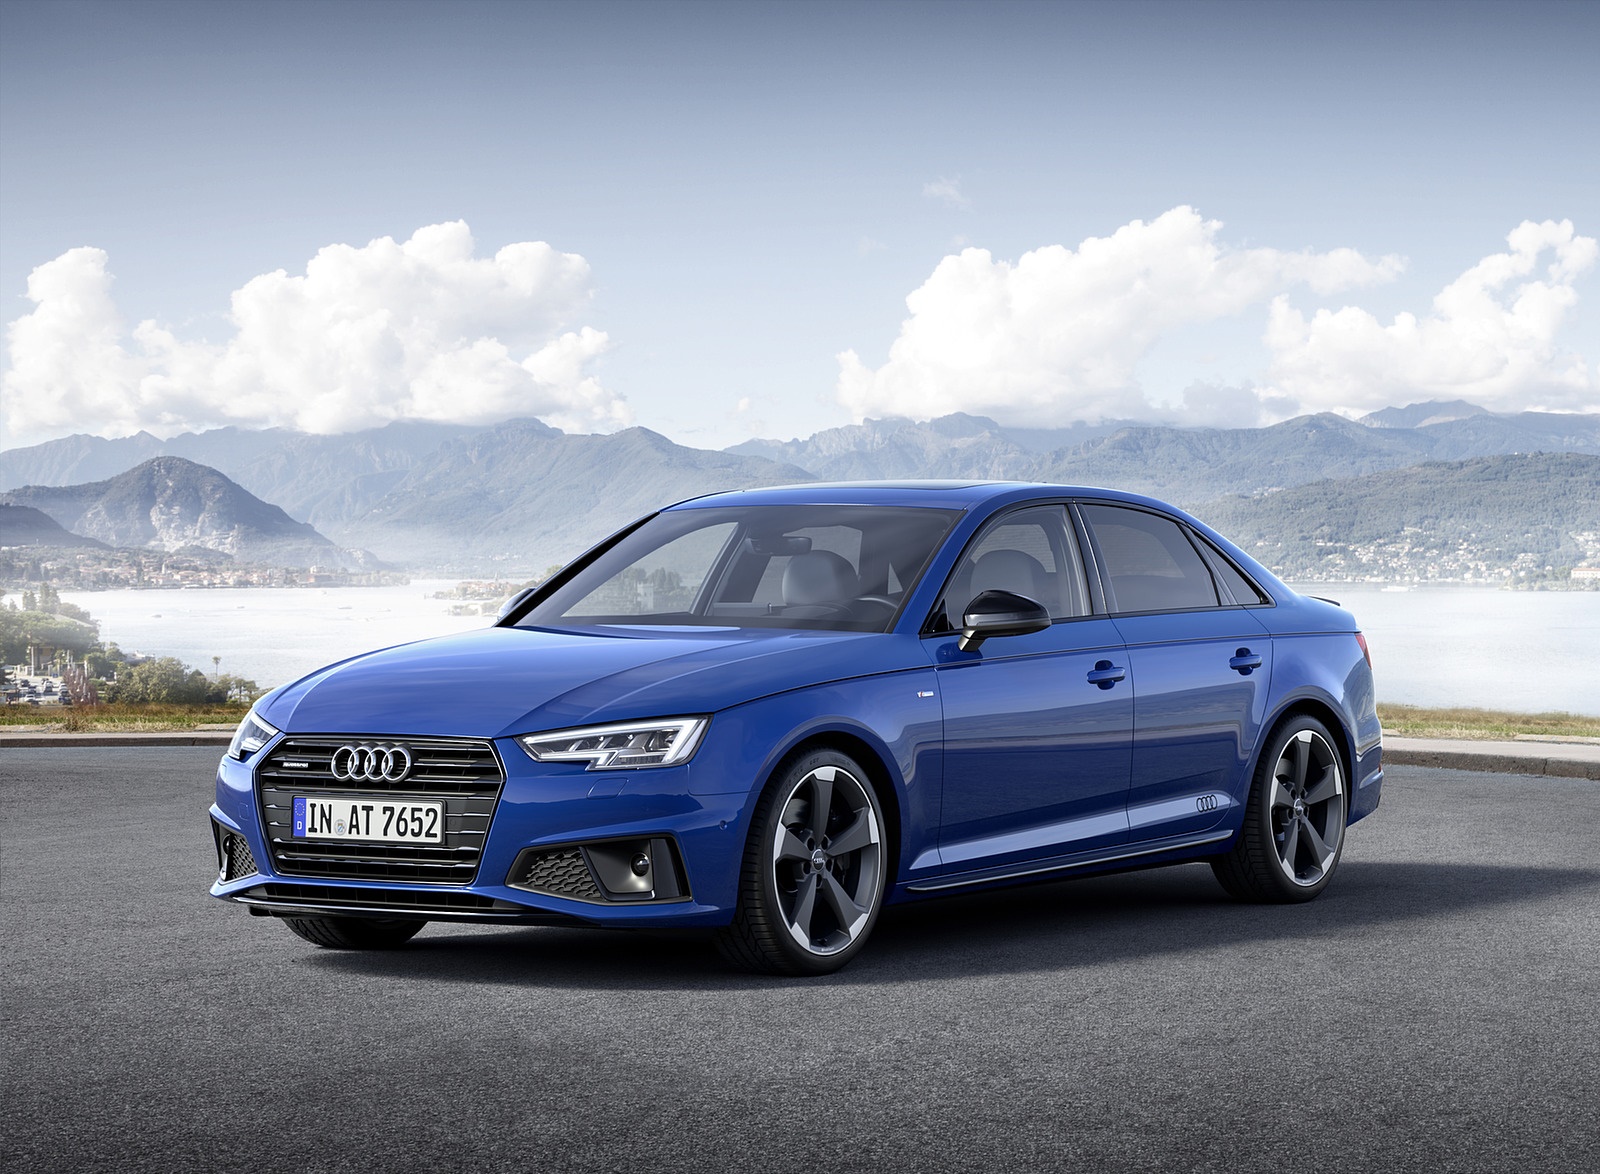 2019 Audi A4 (Color: Ascari Blue) Front Three-Quarter Wallpapers #26 of 35